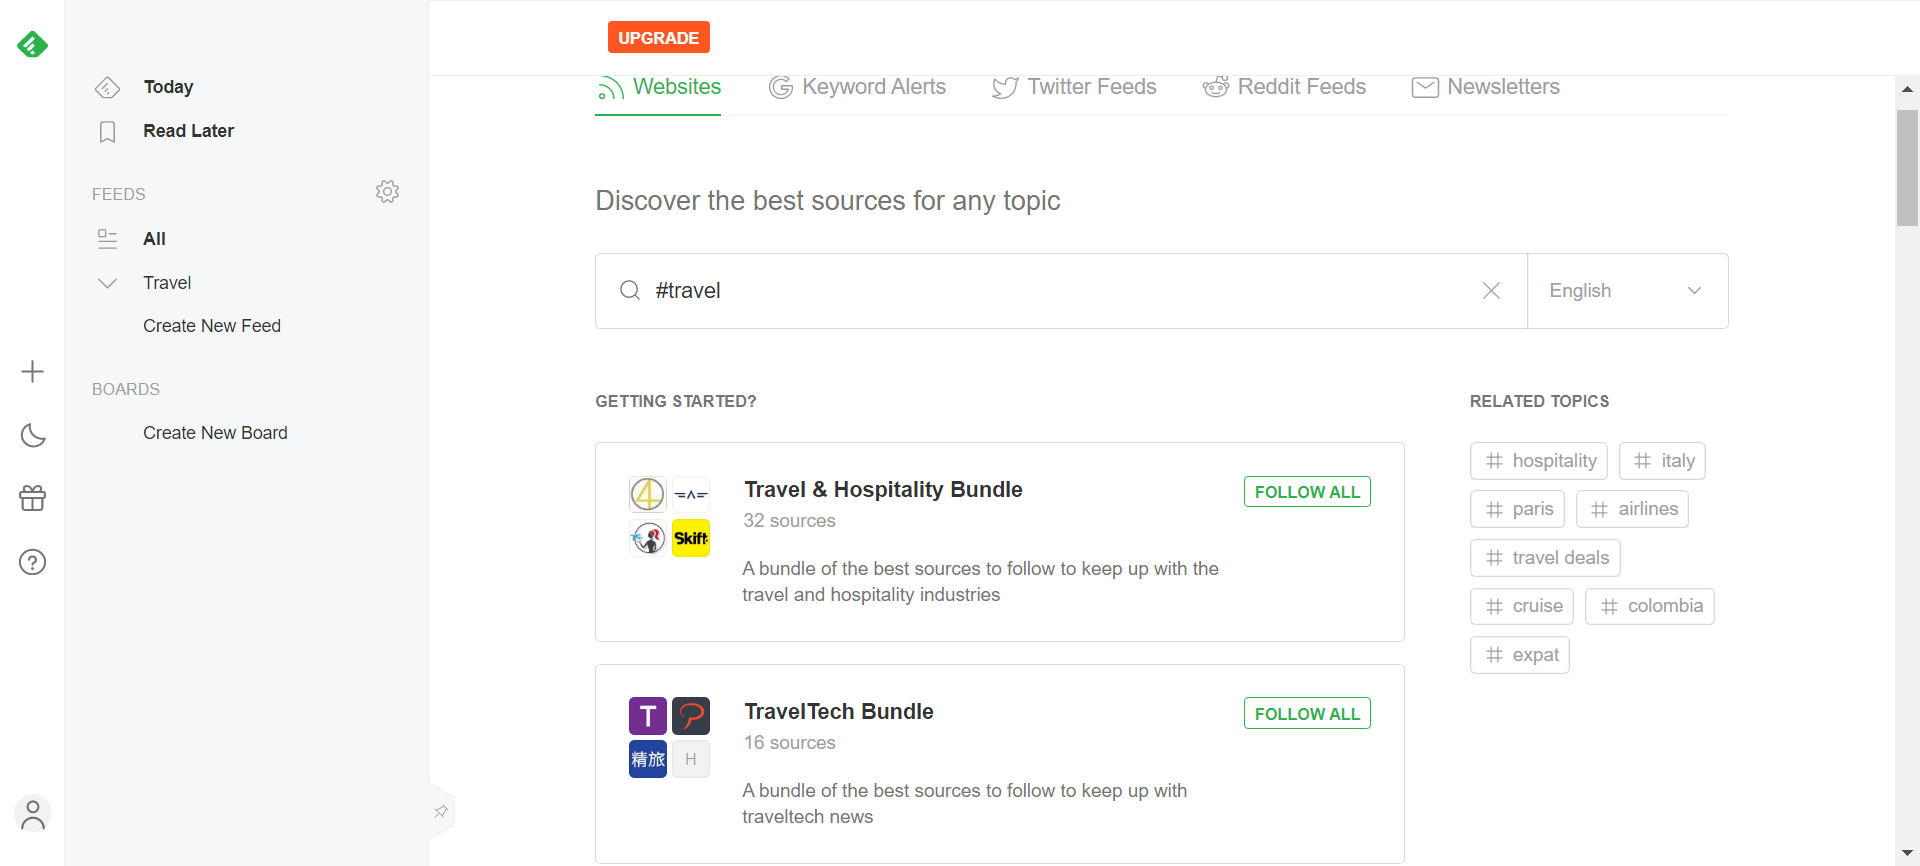 Feedly screenshot "20 Must Have Social Media Marketing Tools" blog post